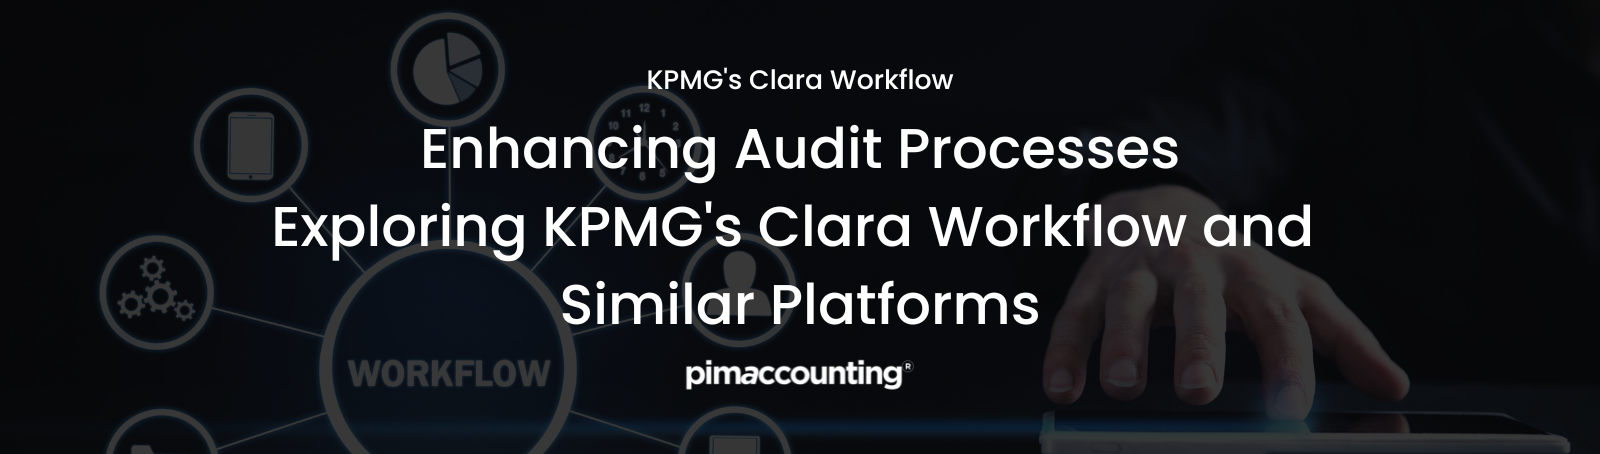 Enhancing Audit Processes: Exploring KPMG's Clara Workflow and Similar Platforms